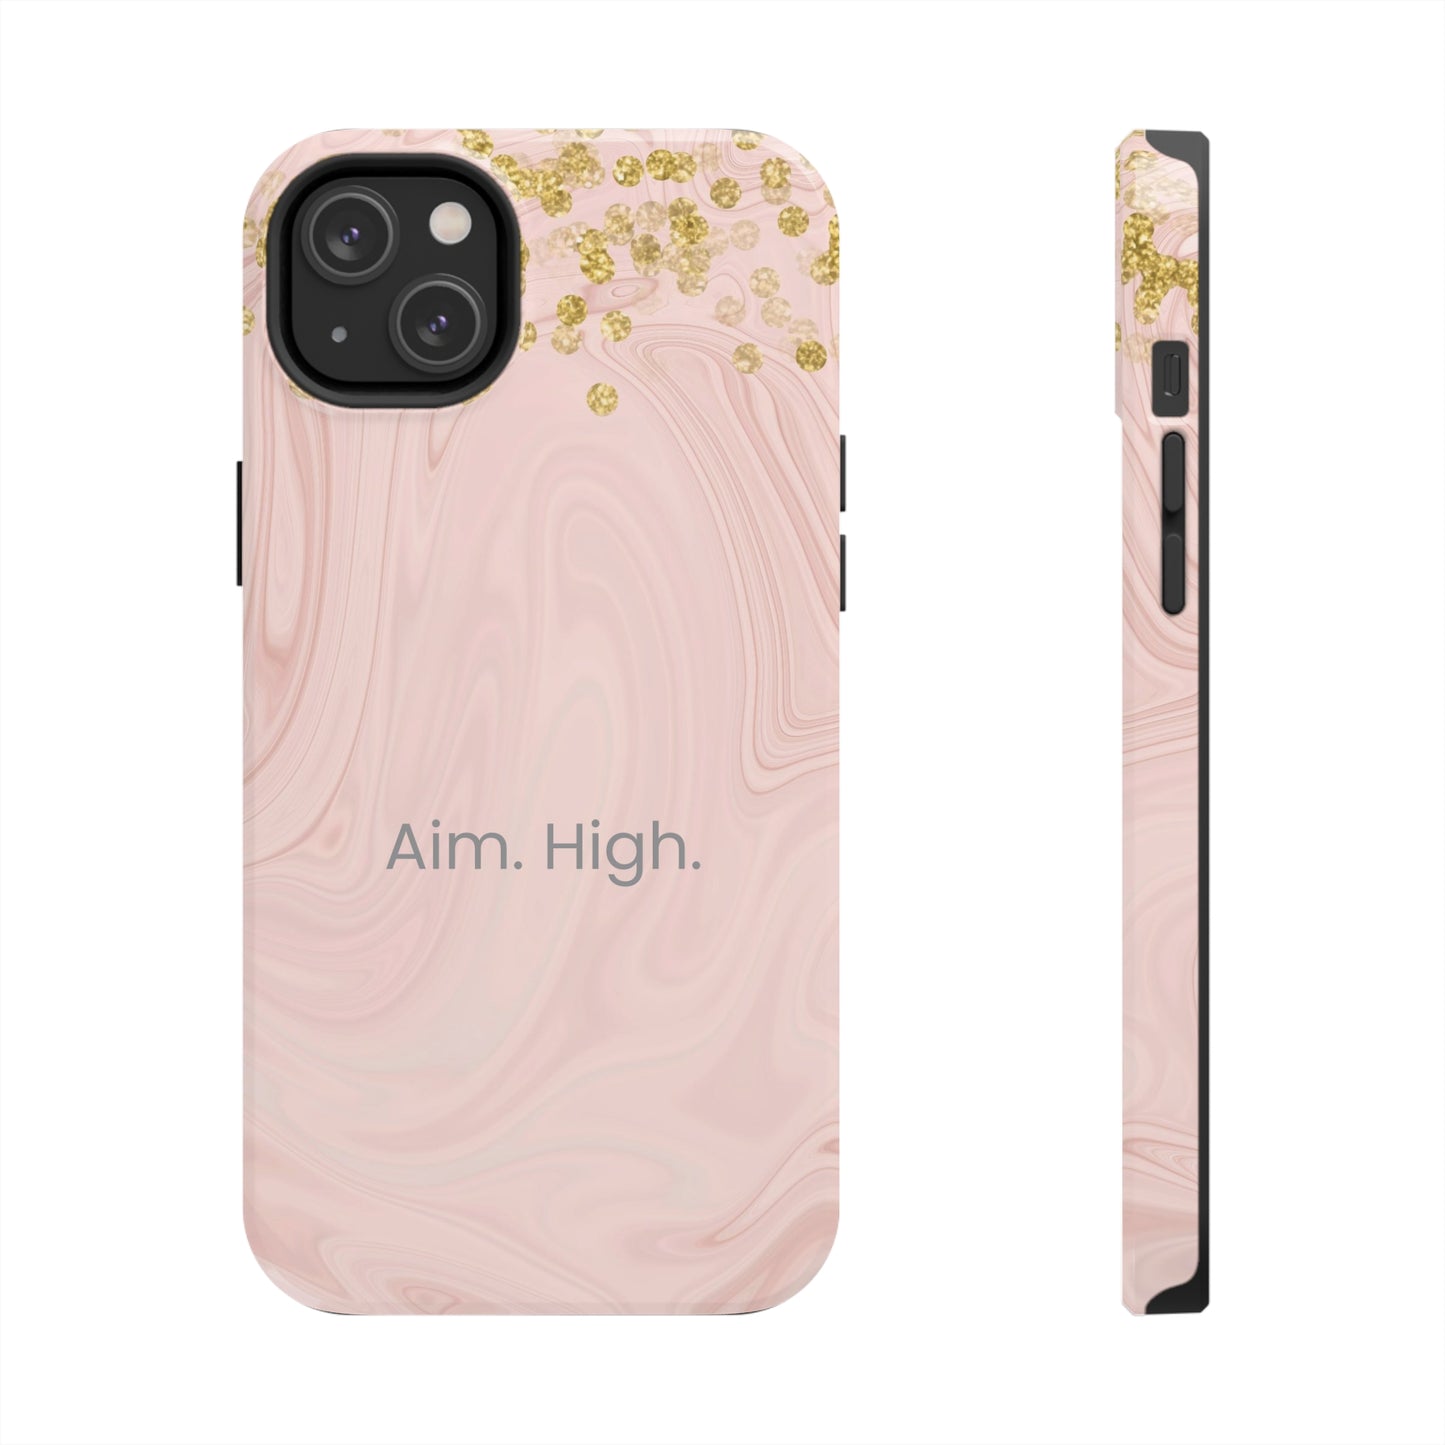 Aim. High. / Sparkle Rose Gold iPhone Case